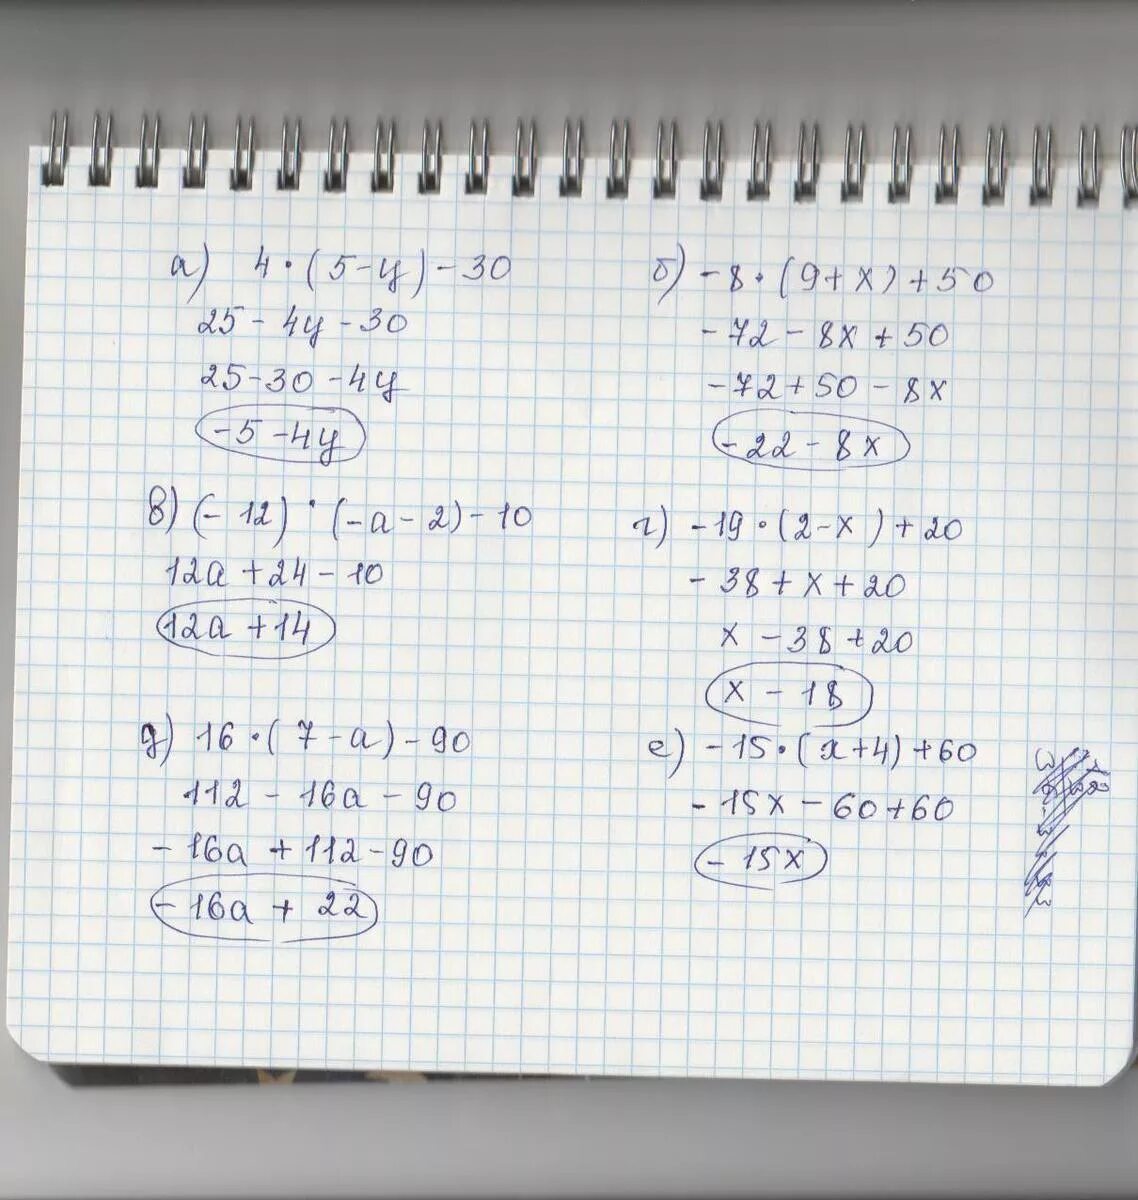 12 3x 9 4x решение. 20-3(Х-5)<16-7х. 5/4-Х+5/Х=10/5. Решение 5х+12=60. 4нвк 60-12-19.